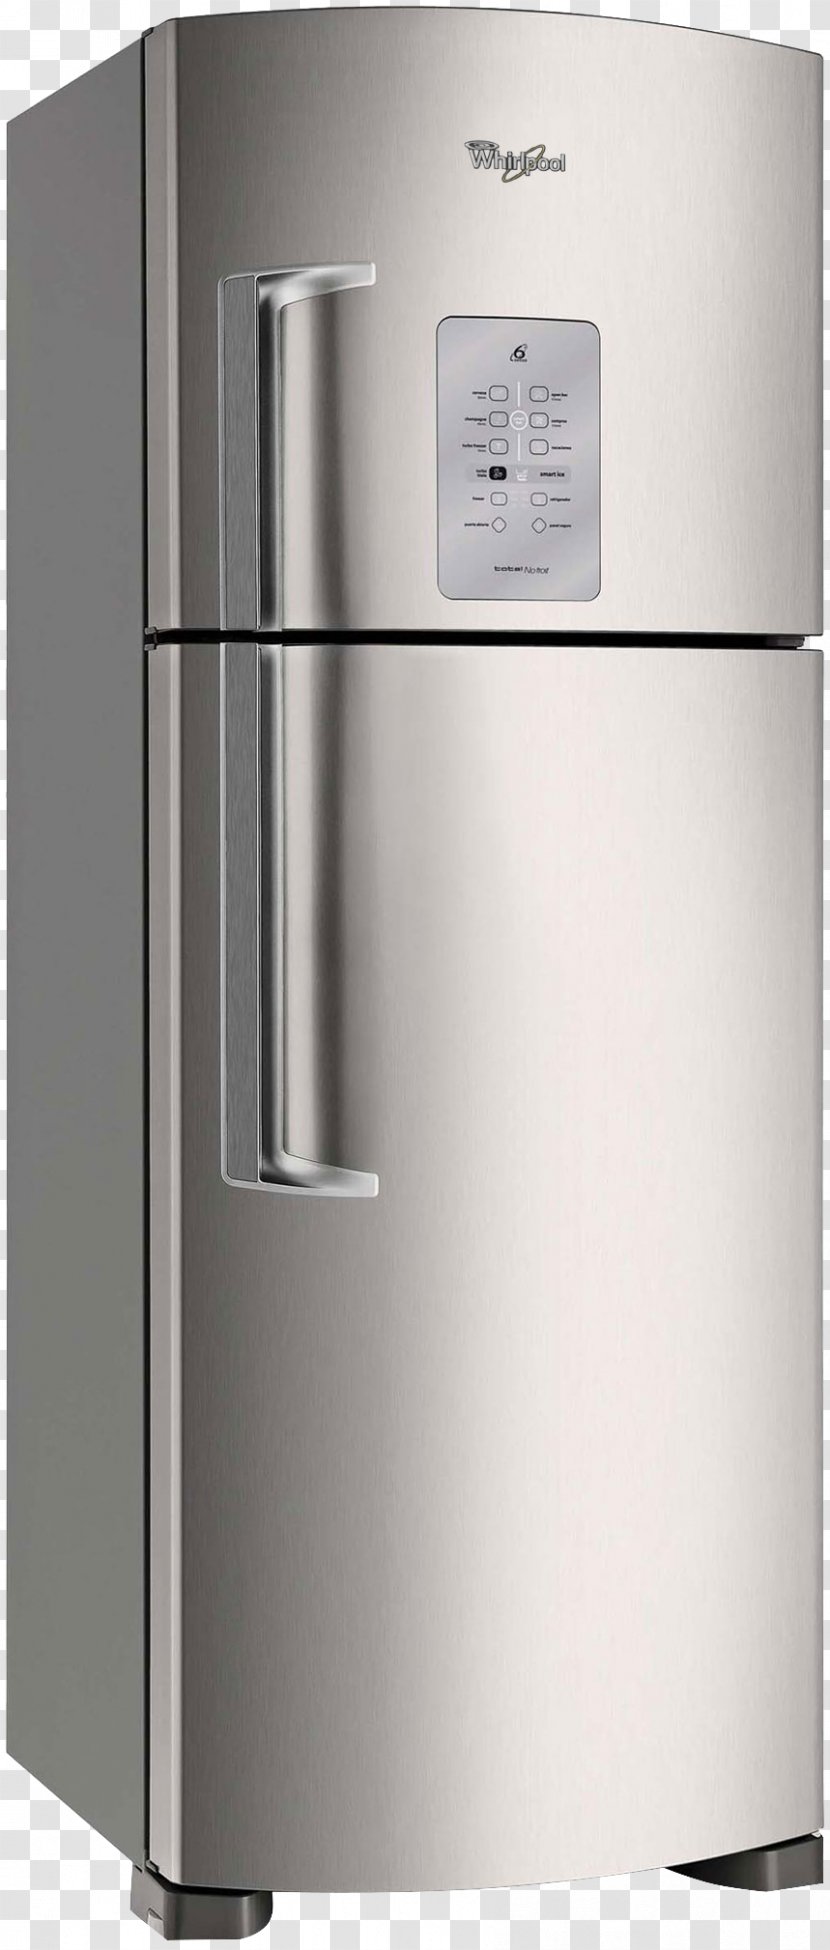 Refrigerator Auto-defrost Freezers Whirlpool Corporation Kitchen - Refrigeration Transparent PNG